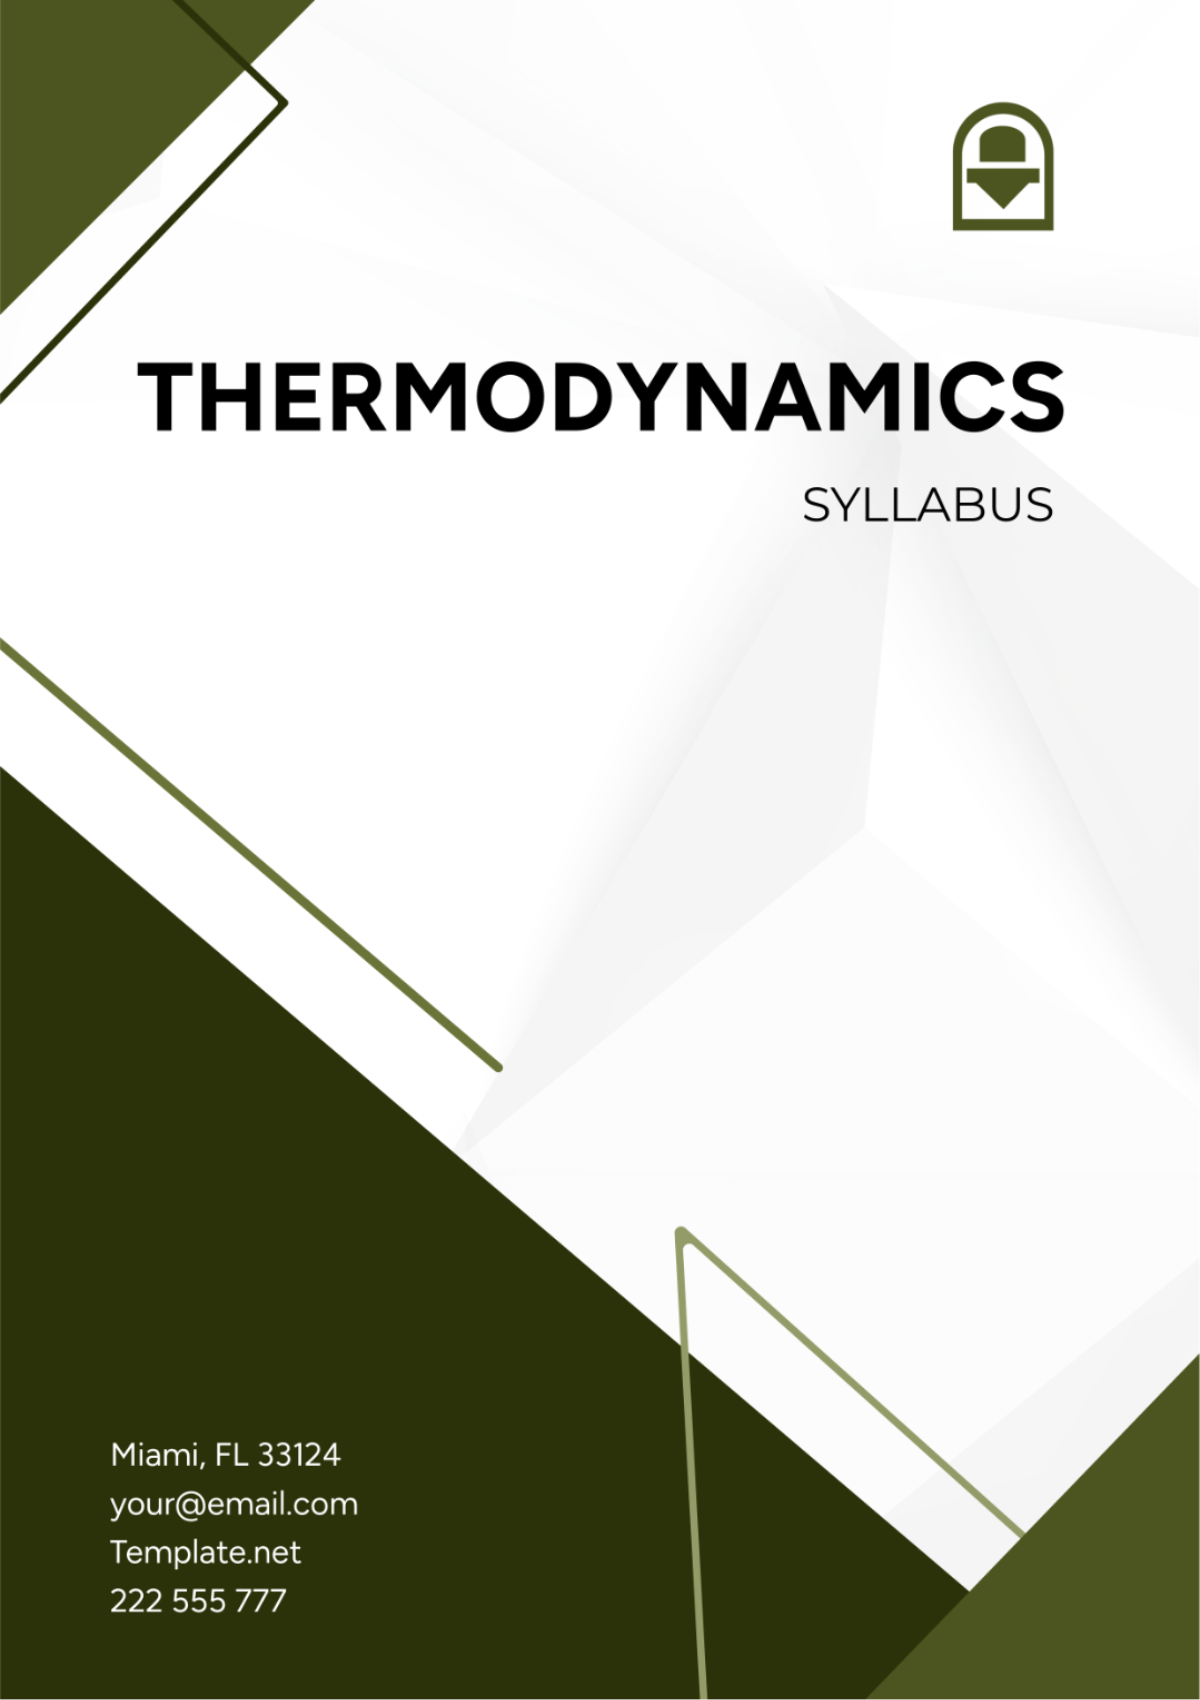 Thermodynamics Syllabus Template